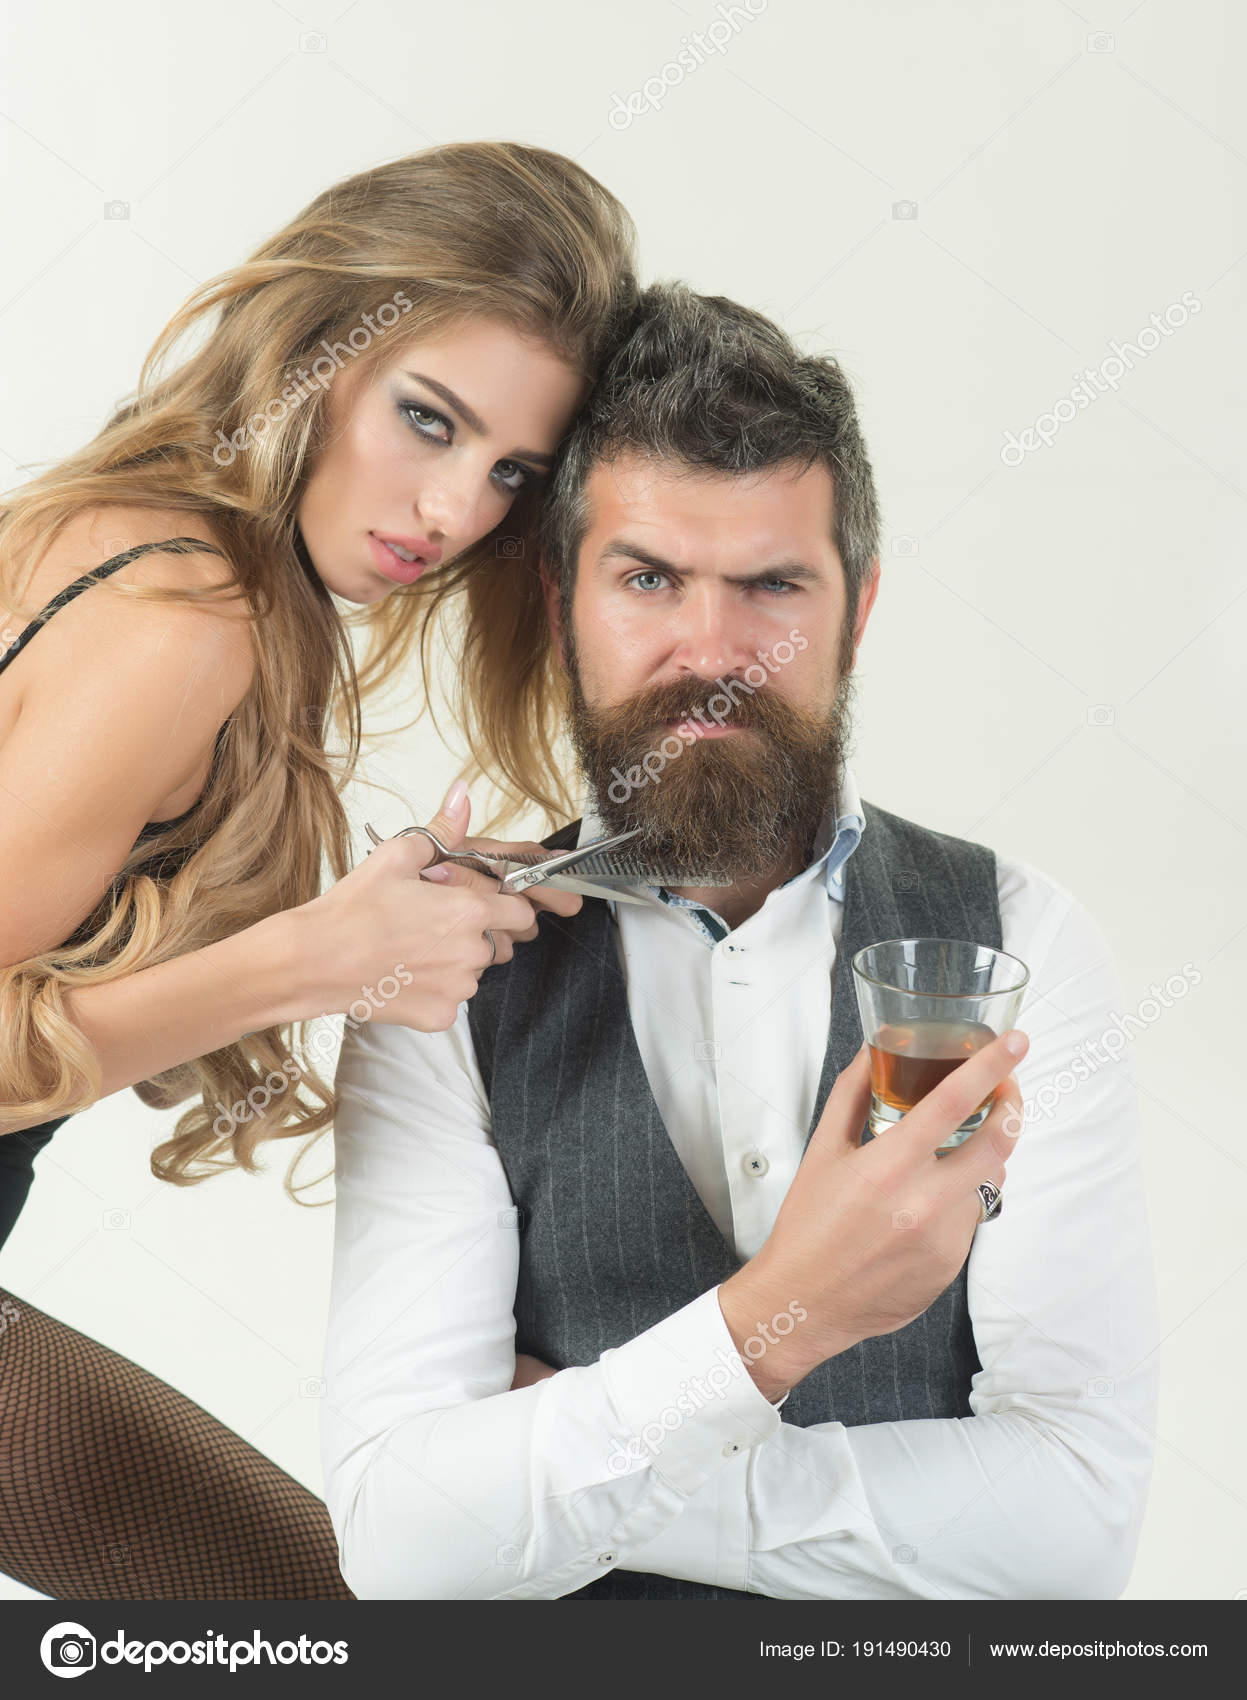 Woman Razor Comb Cut Hair Man Bearded Man Drink Whiskey